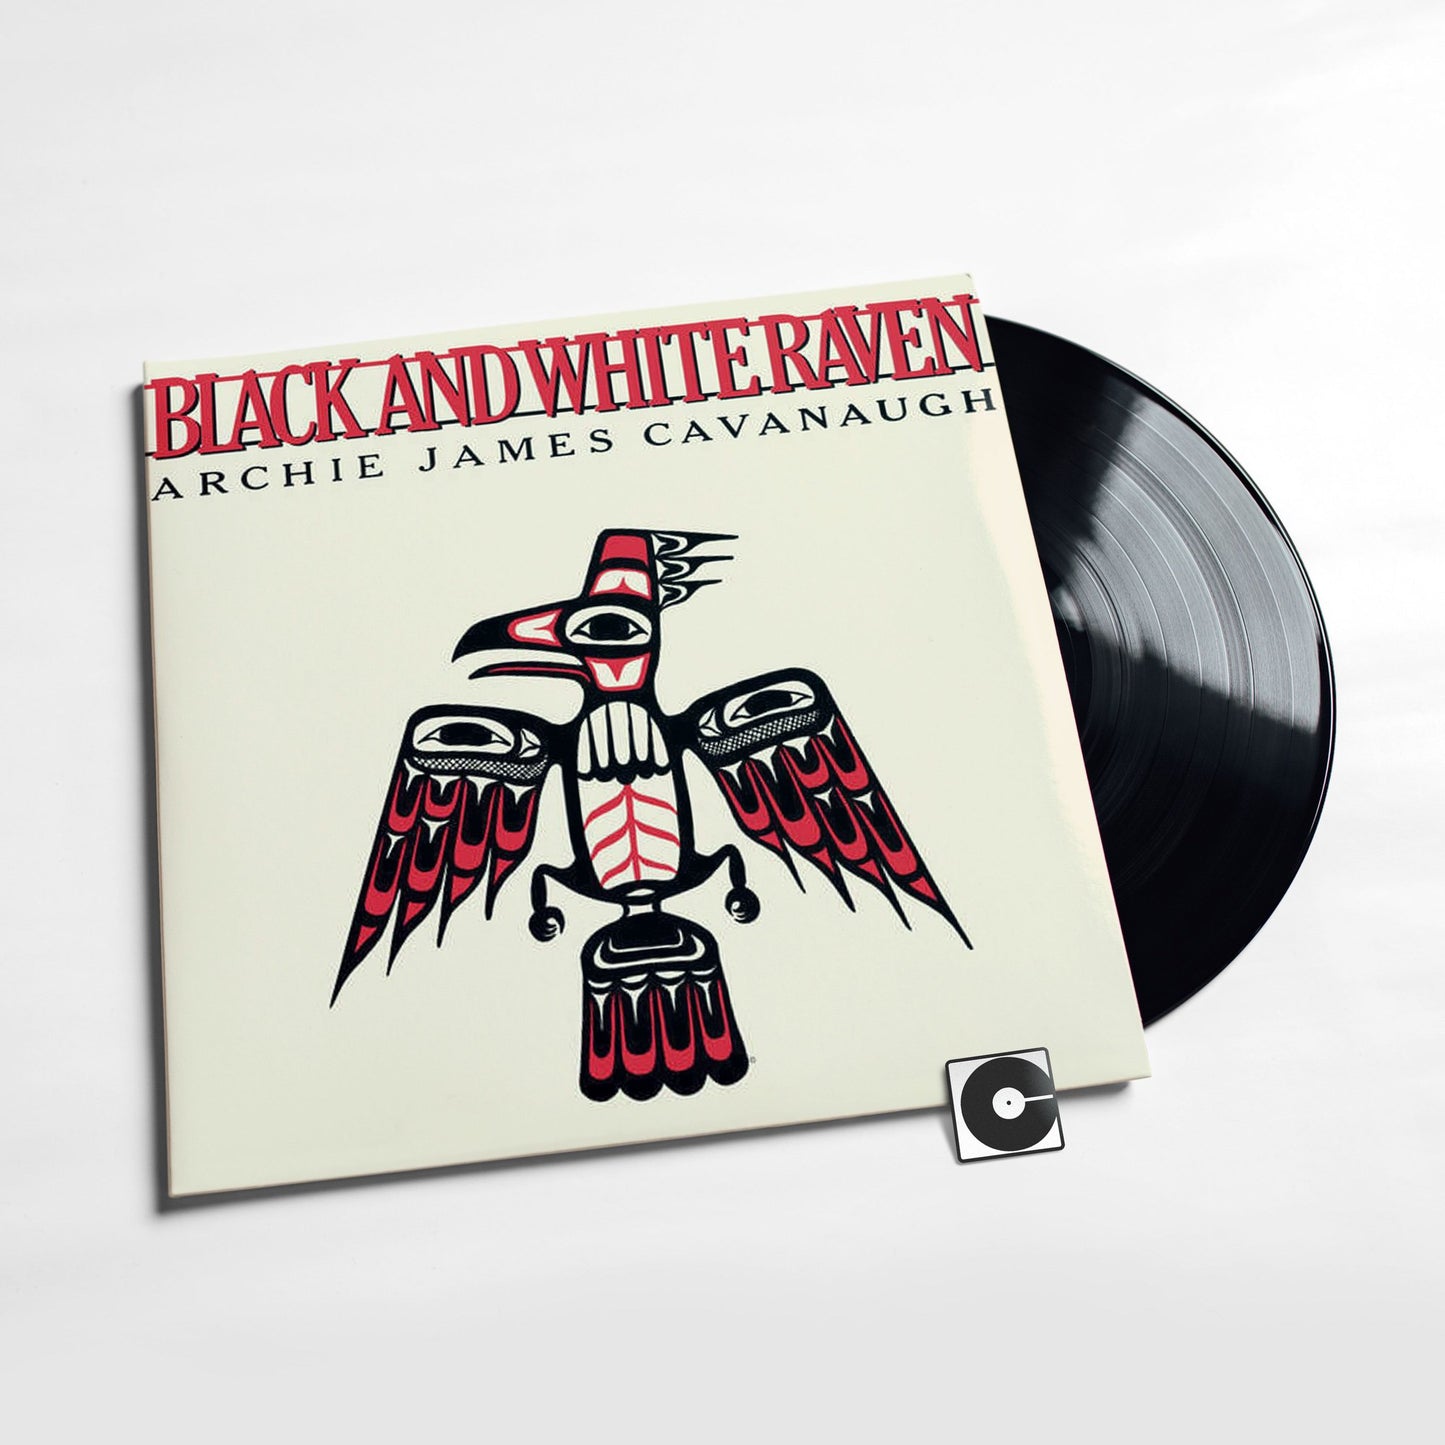 Archie James Cavanaugh - "Black and White Raven"